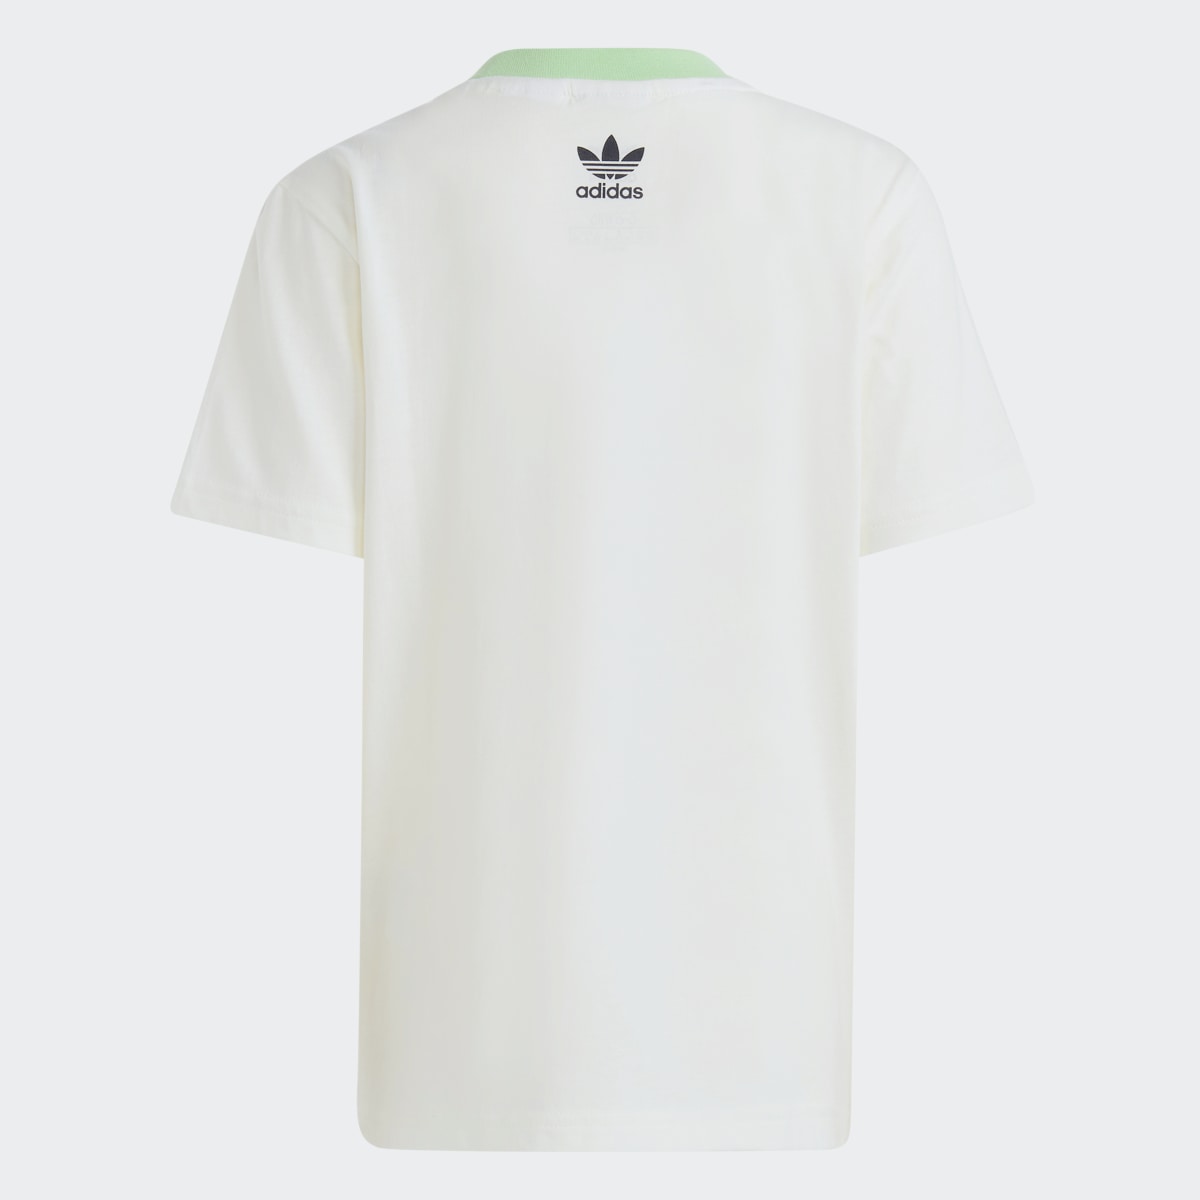 Adidas Graphic Print Şort ve Tişört Takımı. 6